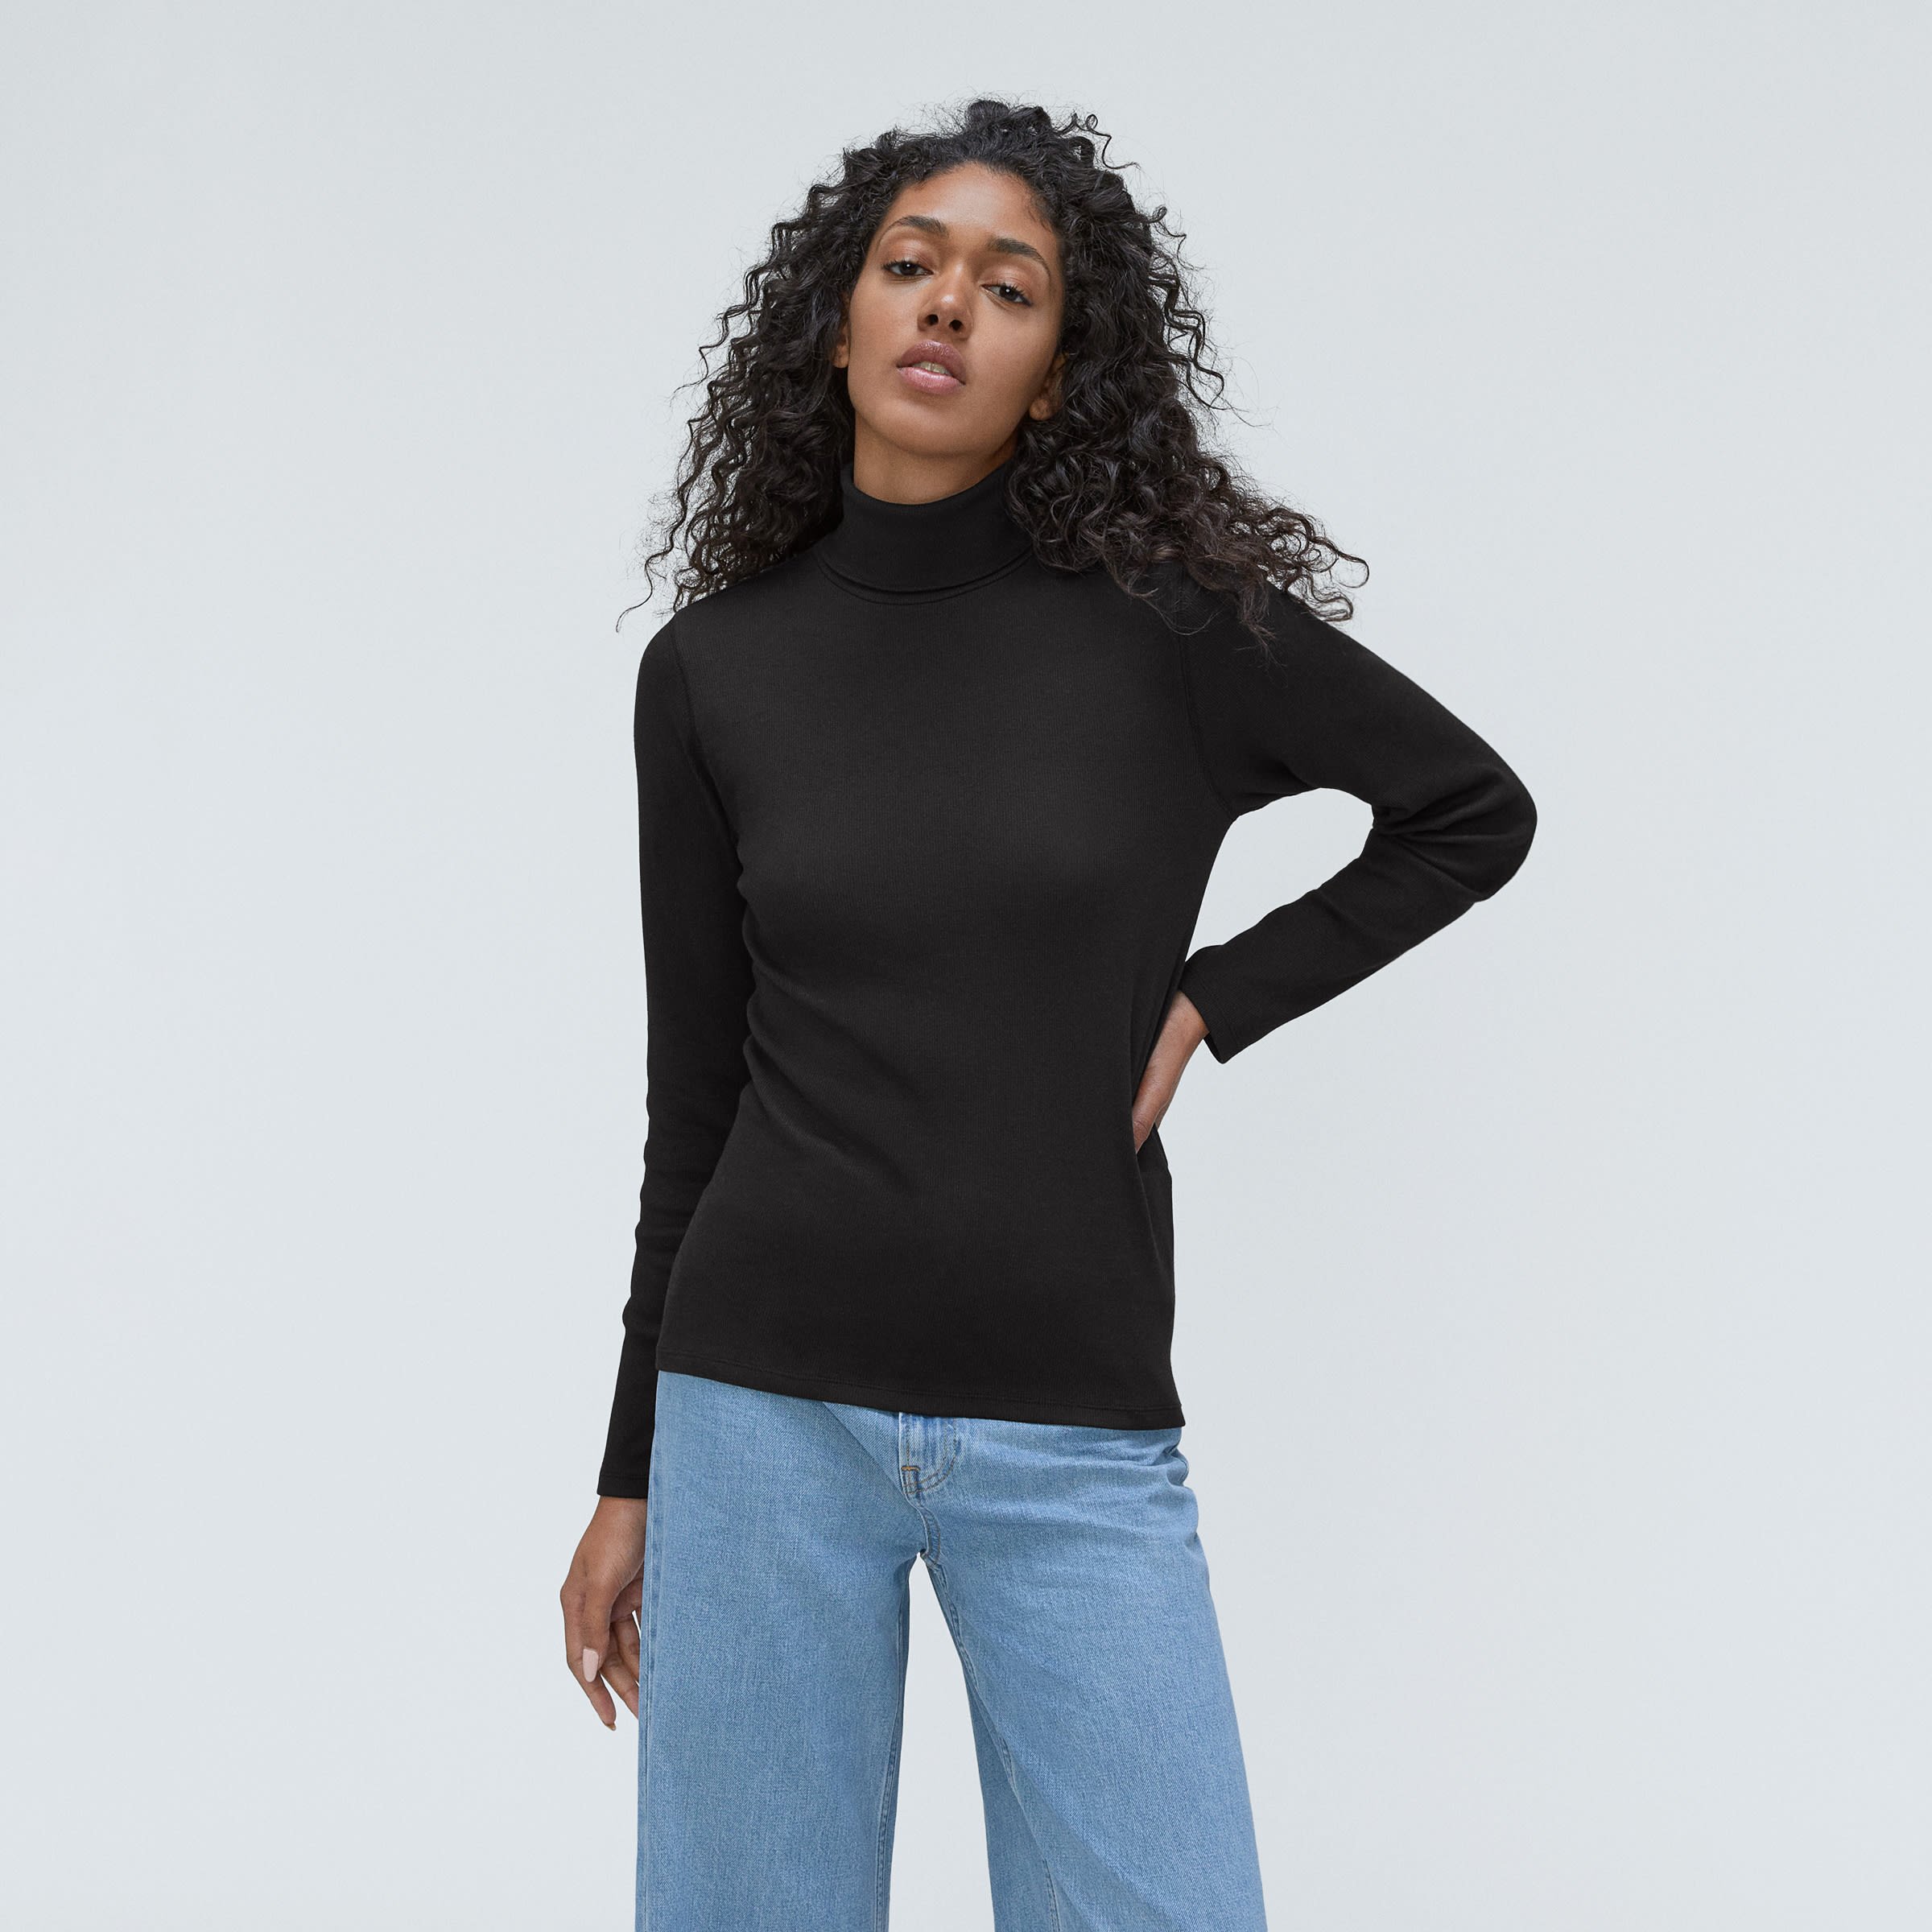 Everlane Women's Supima Micro-Rib Turtleneck Sweater in Black, Size Medium